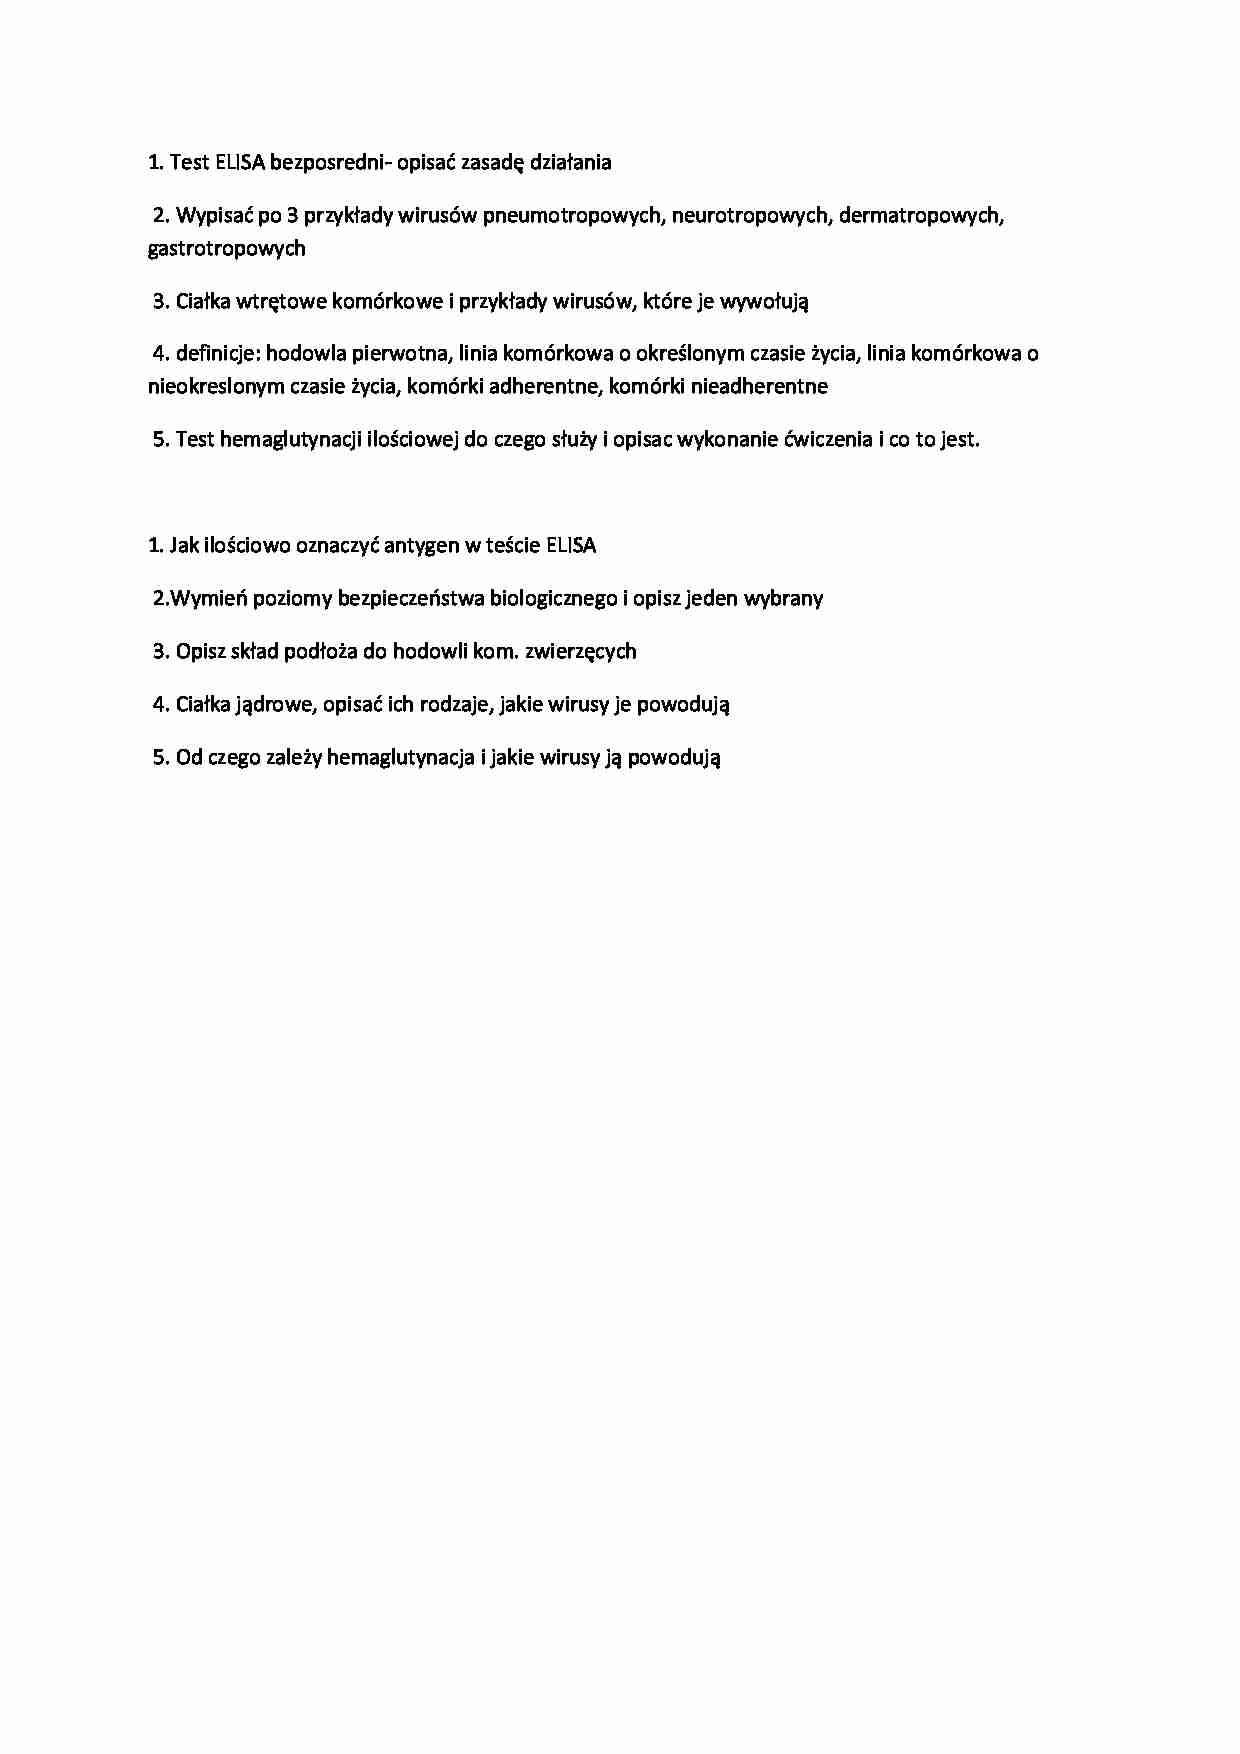 Immunologia - kolokwium 3 - strona 1